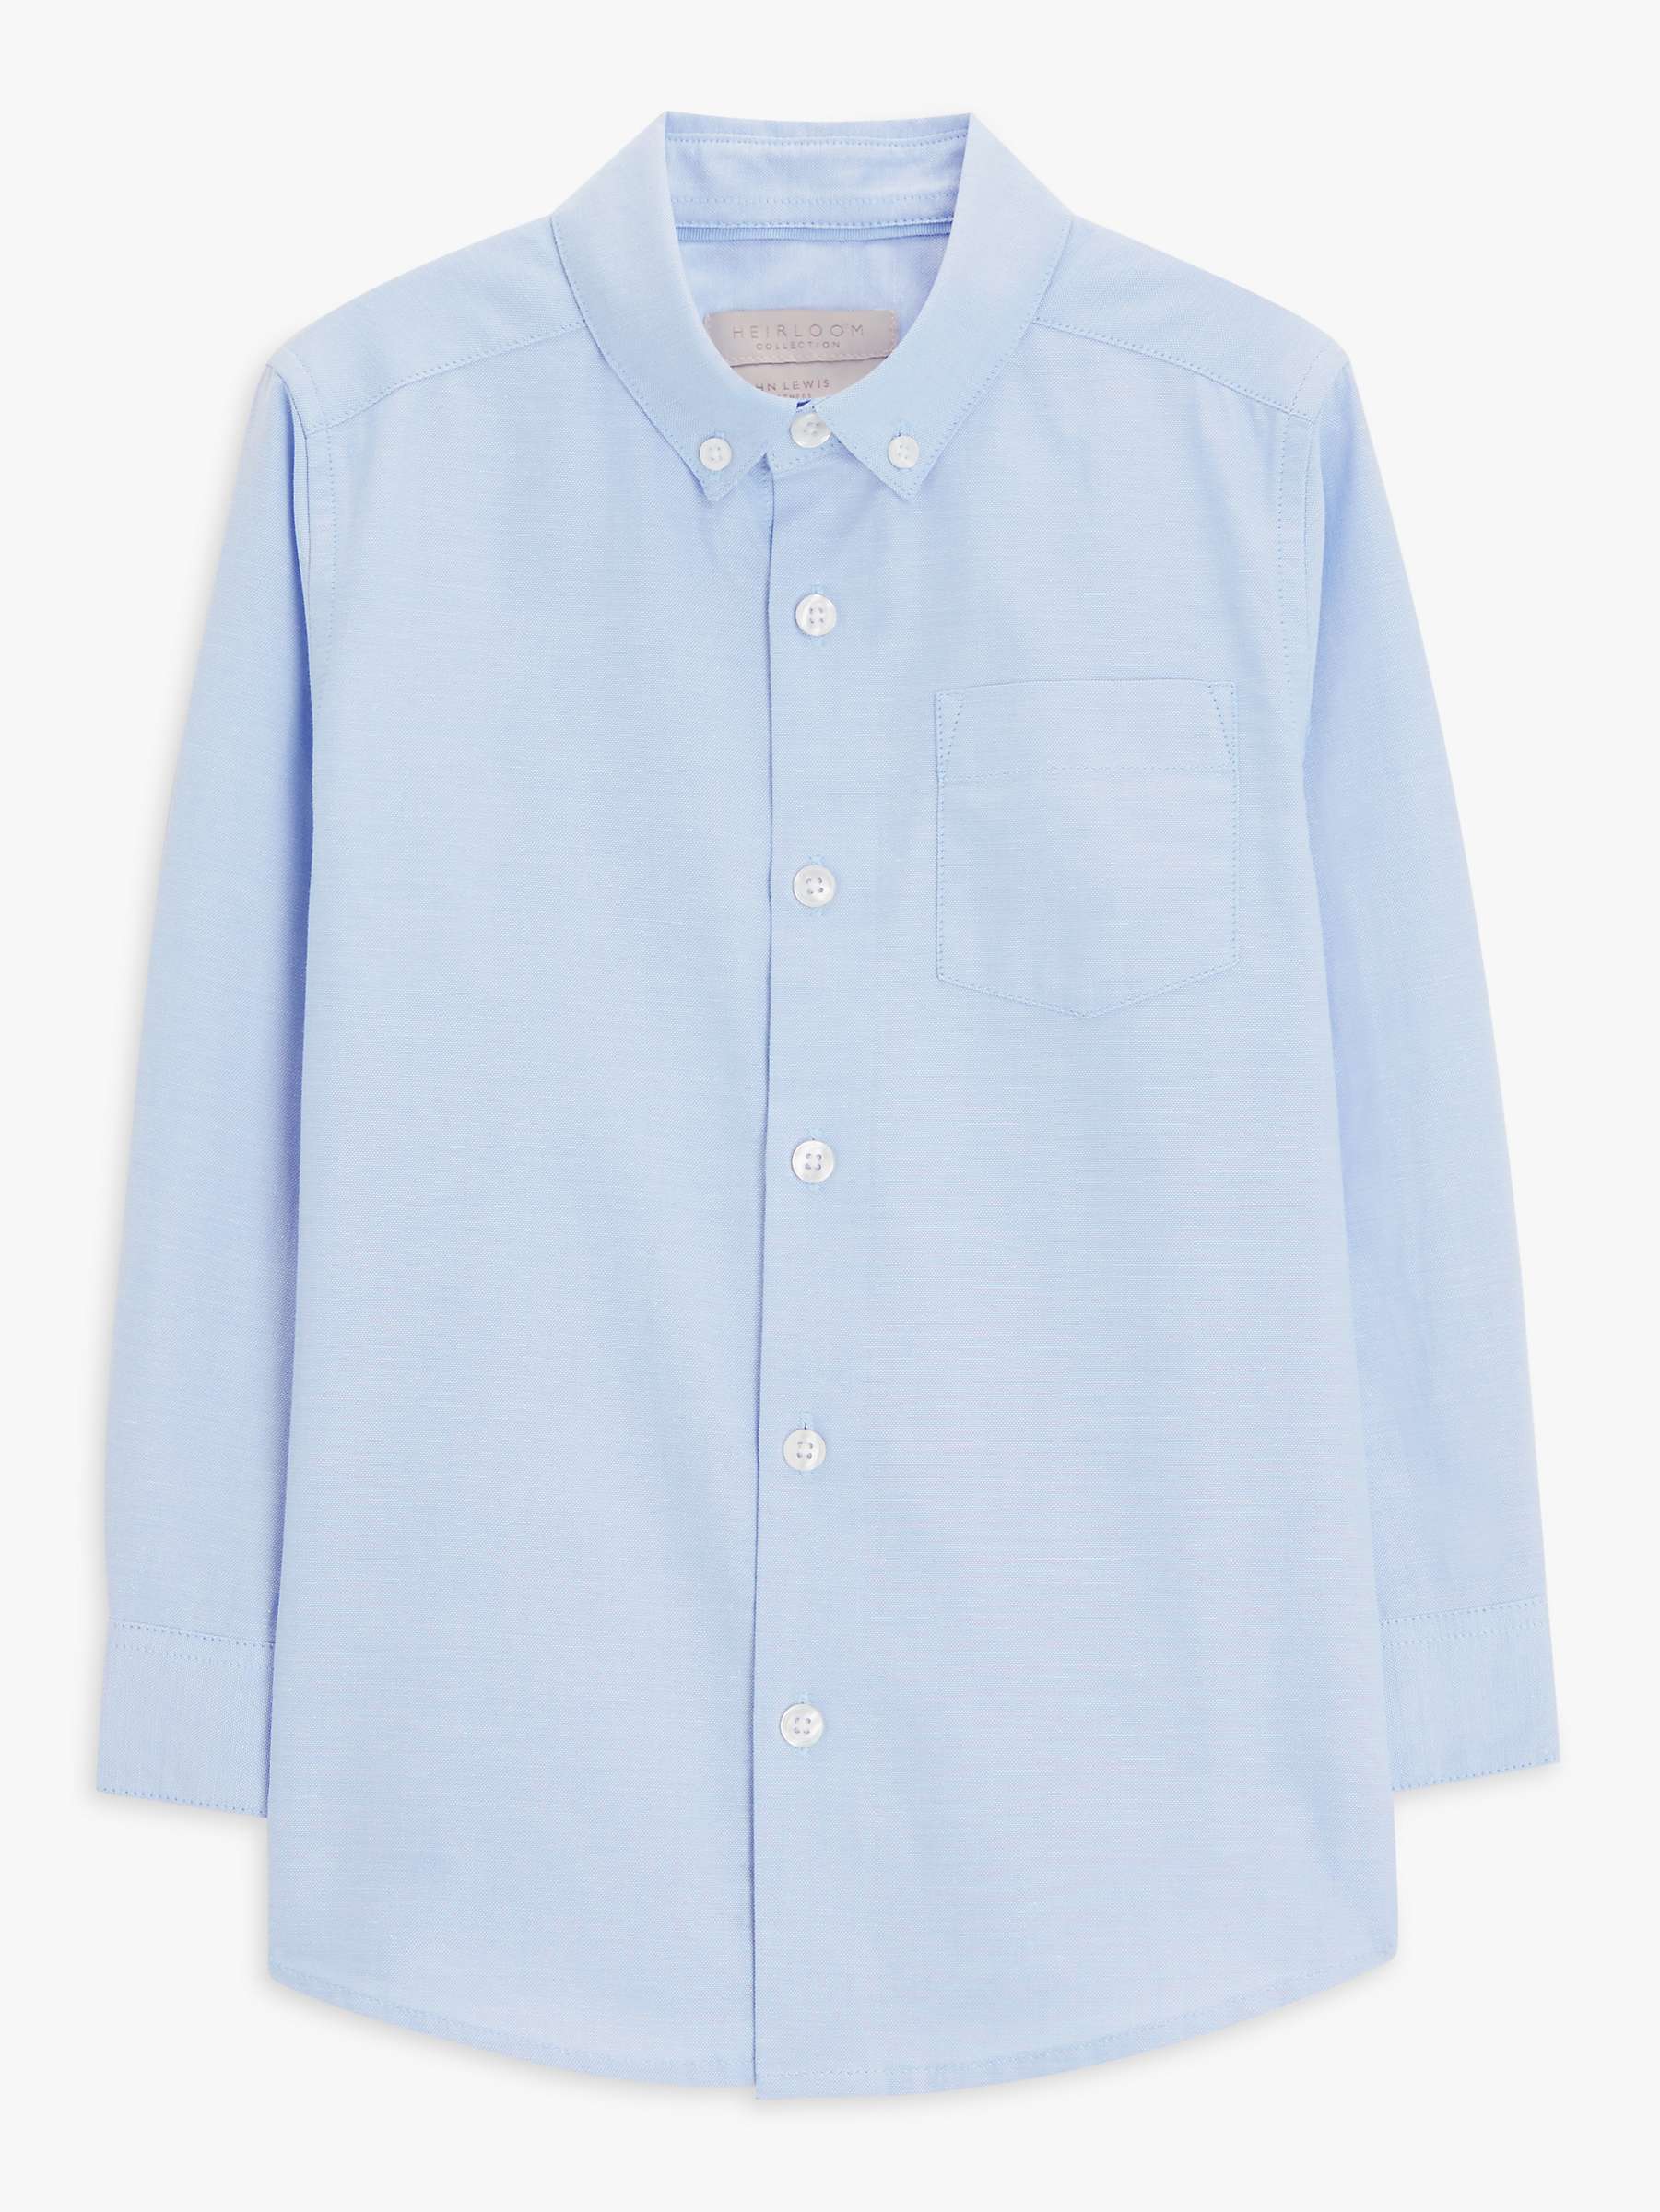 Buy John Lewis Heirloom Collection Kids' Plain Oxford Shirt, Blue Online at johnlewis.com